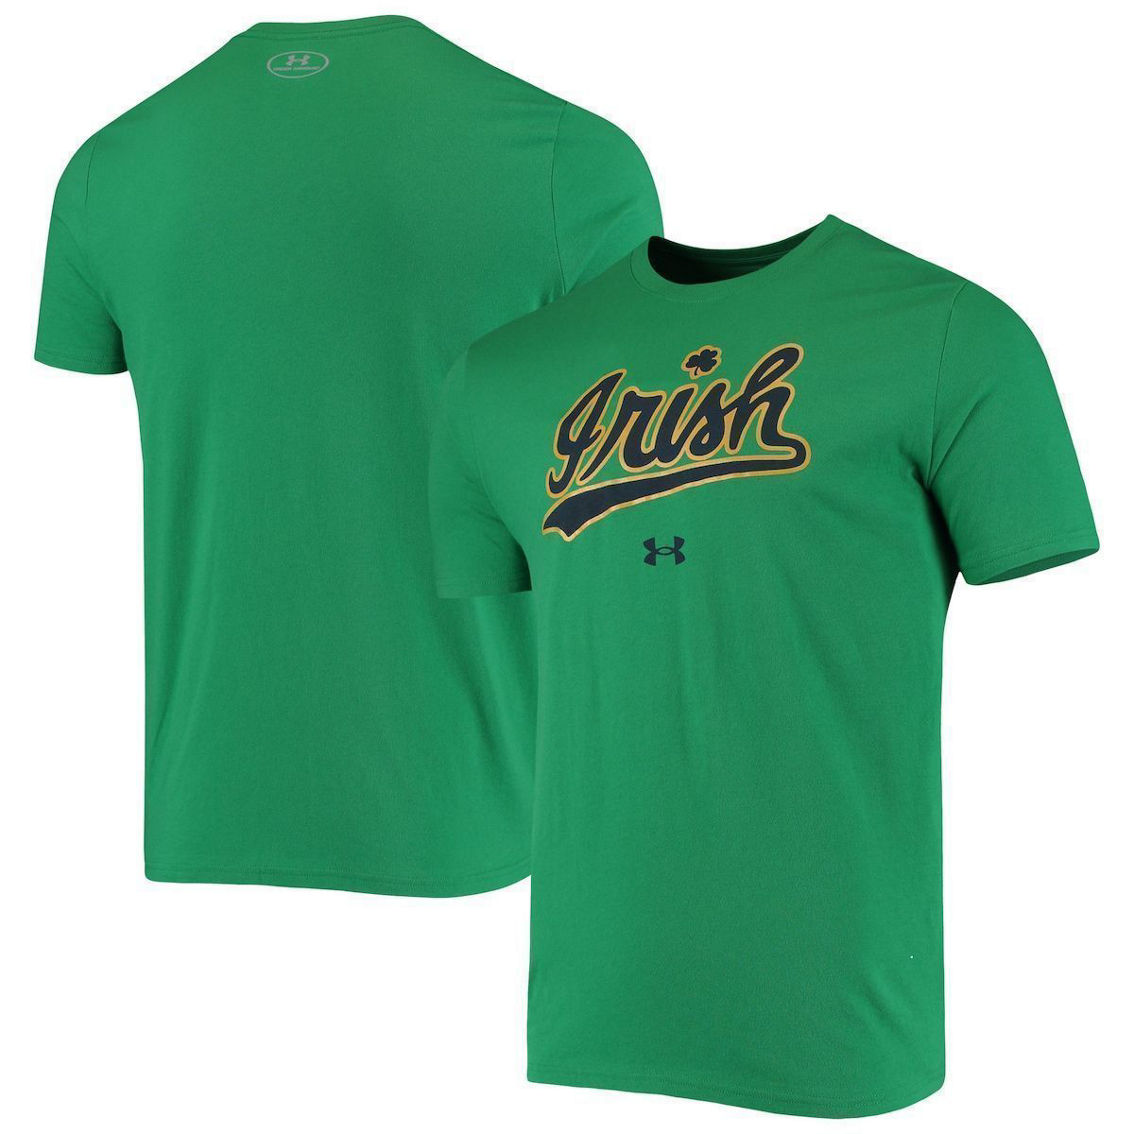 Under Armour Men's Kelly Green Notre Dame Fighting Irish Wordmark Logo Performance Cotton T-Shirt - Image 2 of 4